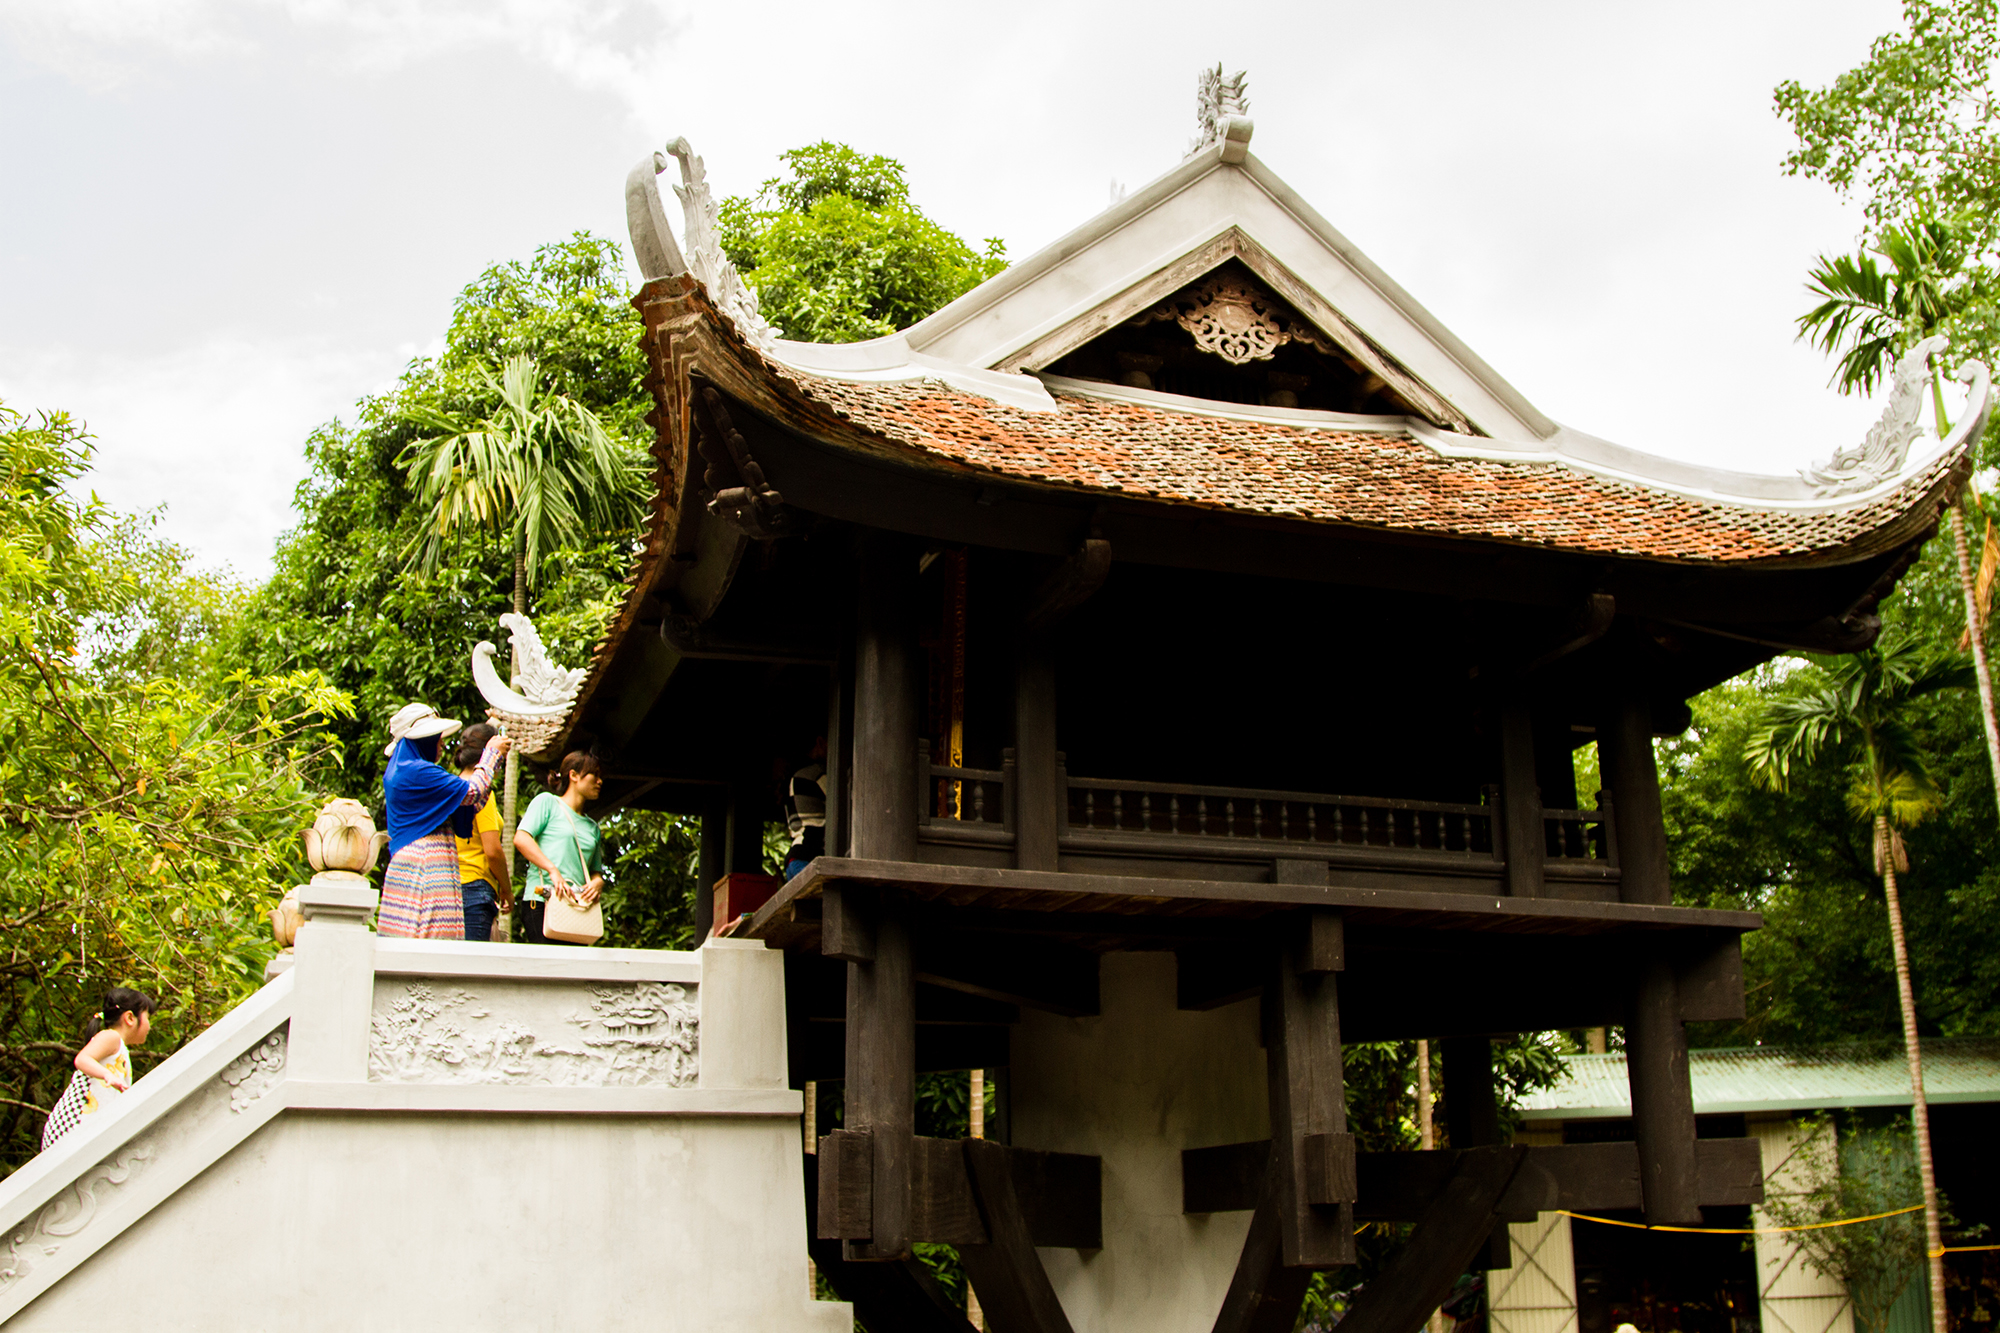 Bersama Travel: One Pilar pagode